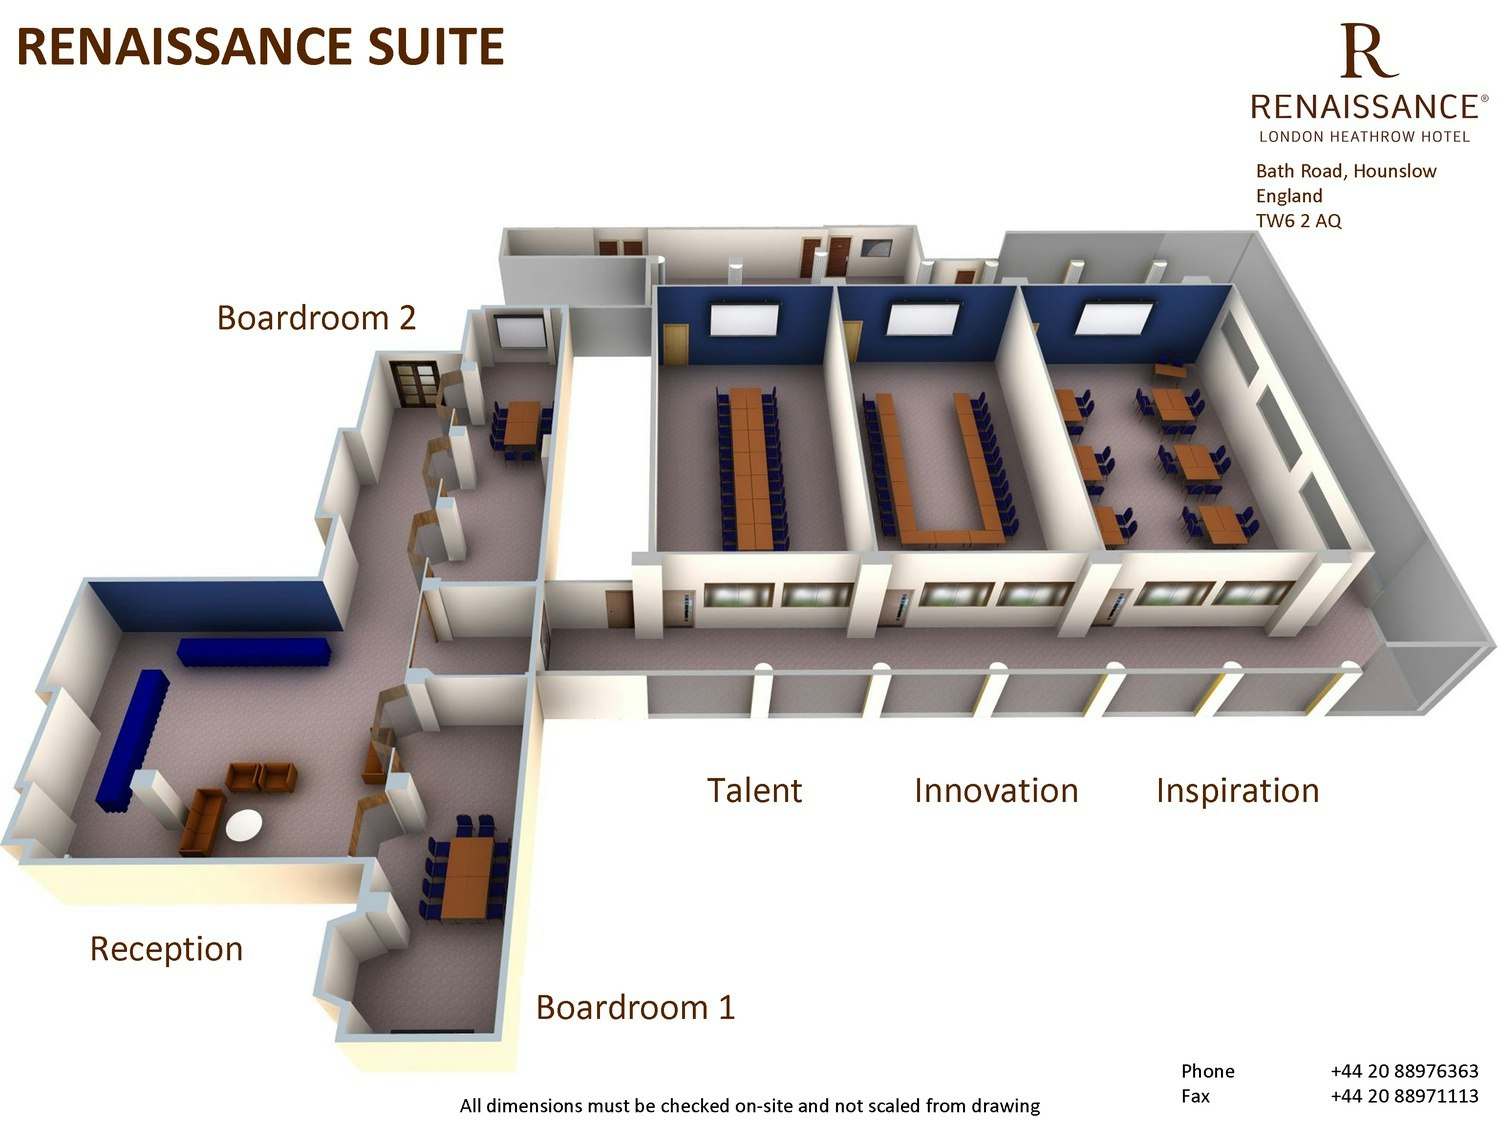 Renaissance London Heathrow Hotel - Renaissance Suite - Boardroom 1  image 2